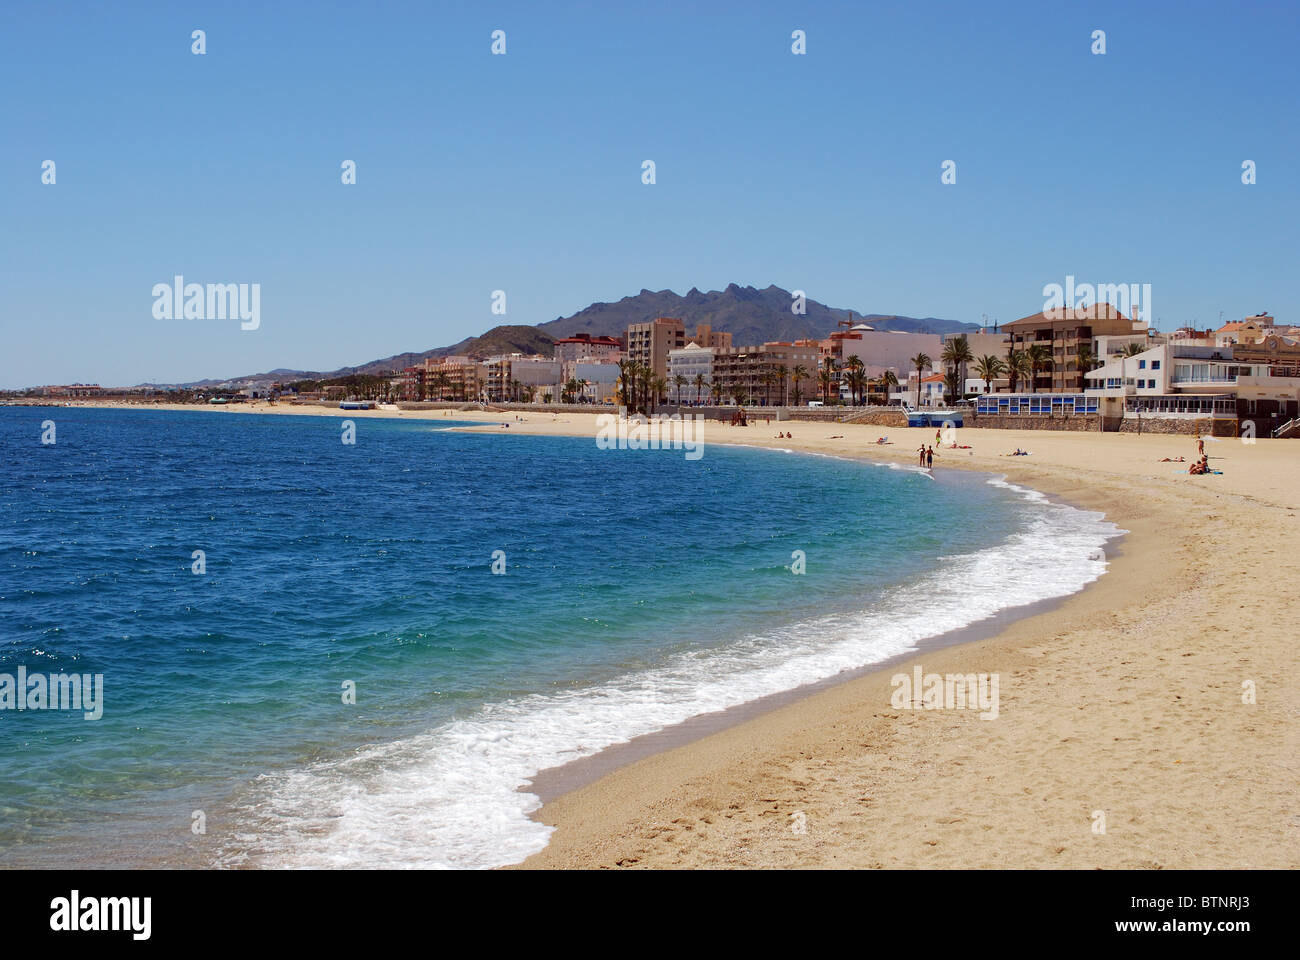 View along the beach, Garrucha, Almeria Province, Costa Almeria, Andalucia, Spain, Western Europe. Stock Photo